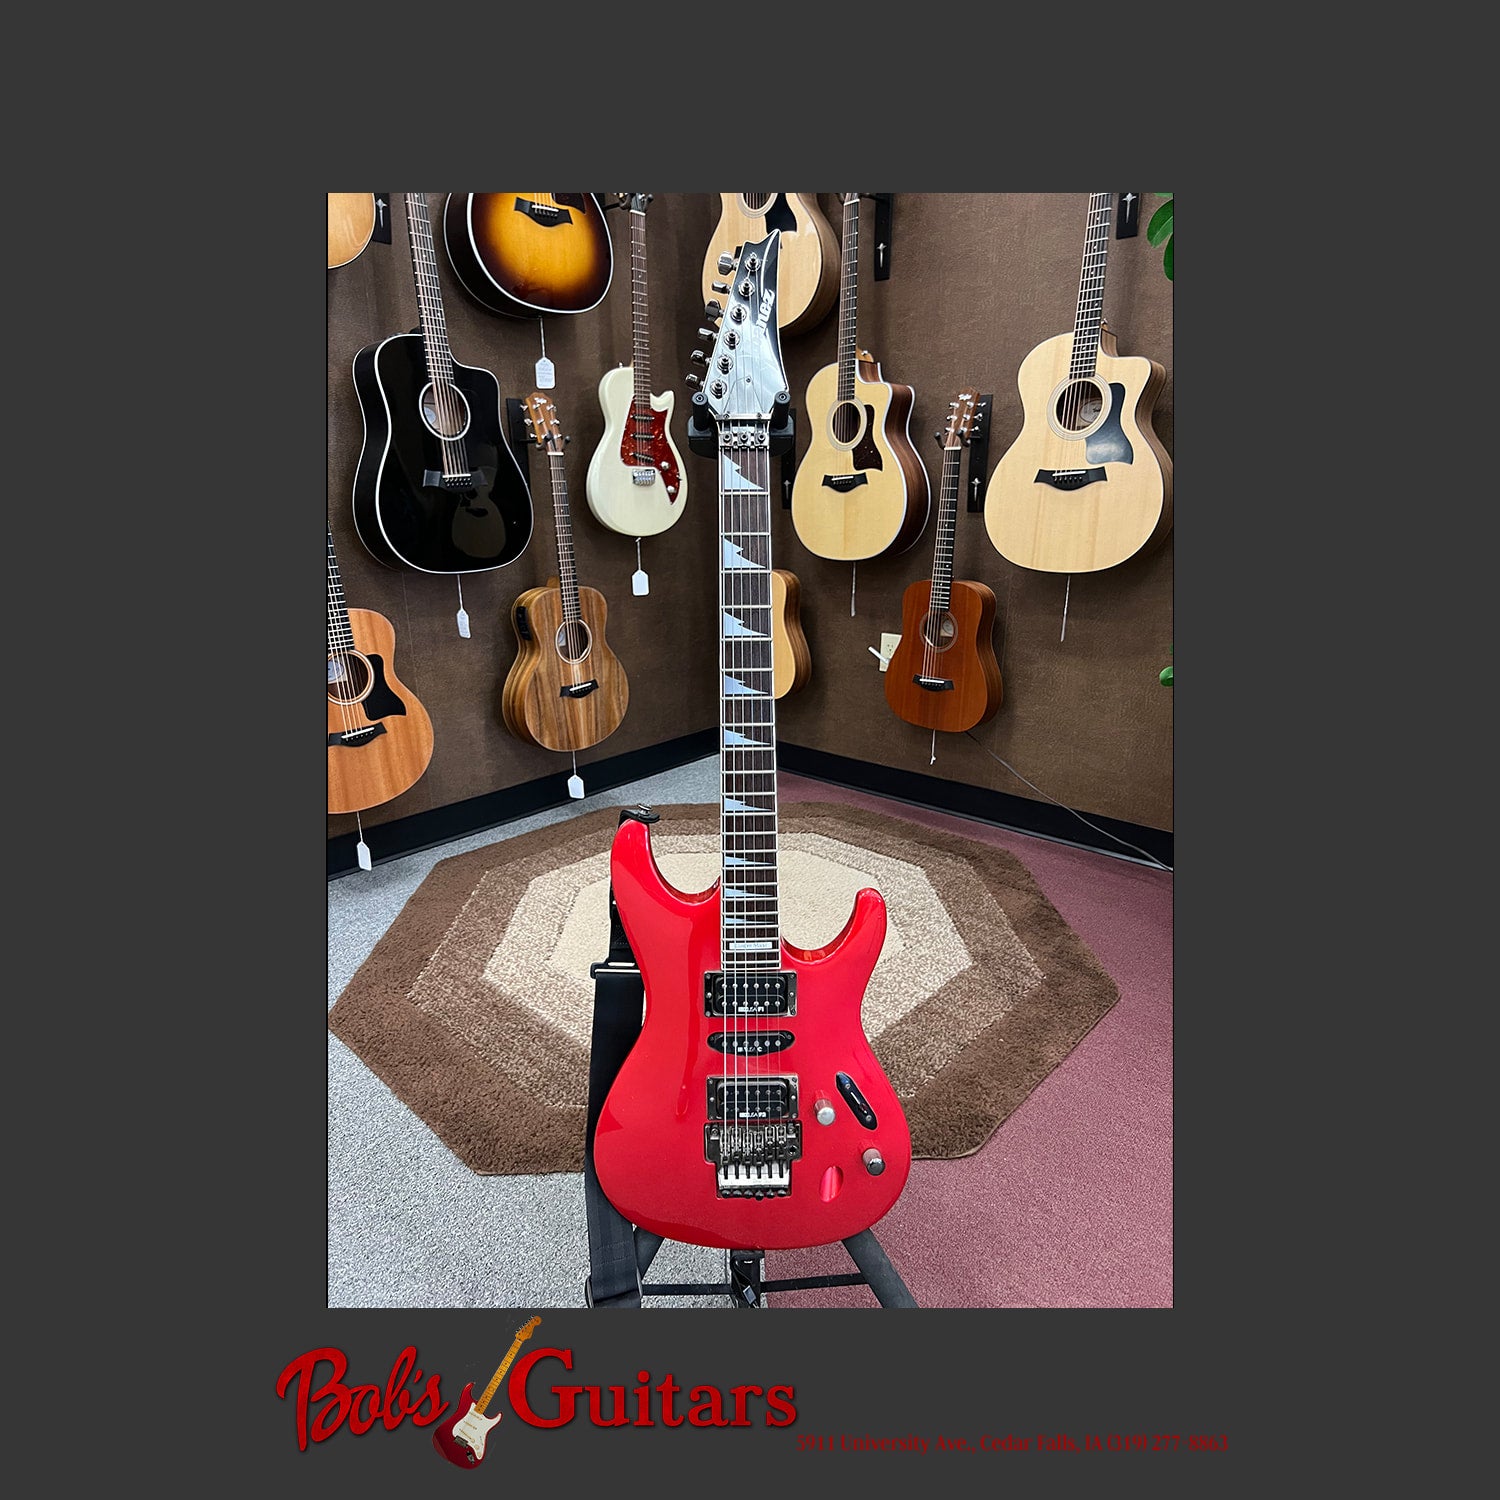 Ibanez 540S LTD (Pre-Owned), Red, SN: F020070 | Bob's Guitars ~ 40 